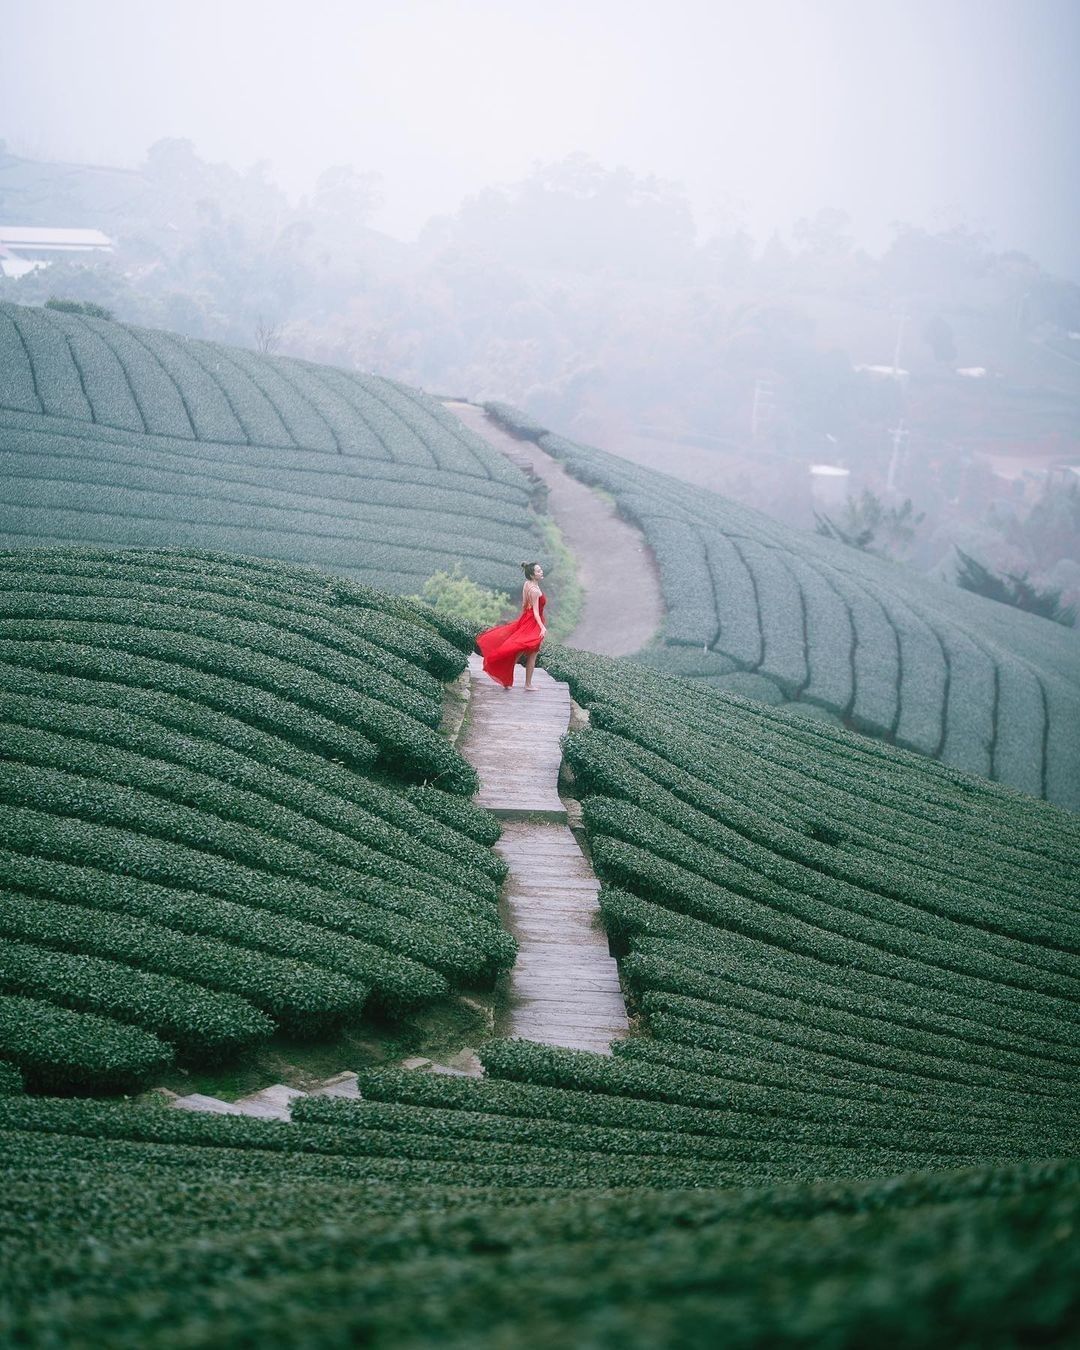 一抹紅立於茶園之中彷彿下一刻隨著雲霧起舞照片授權 @lilianwang_tw -⠀歡迎在您的貼文 #travelalishan ...